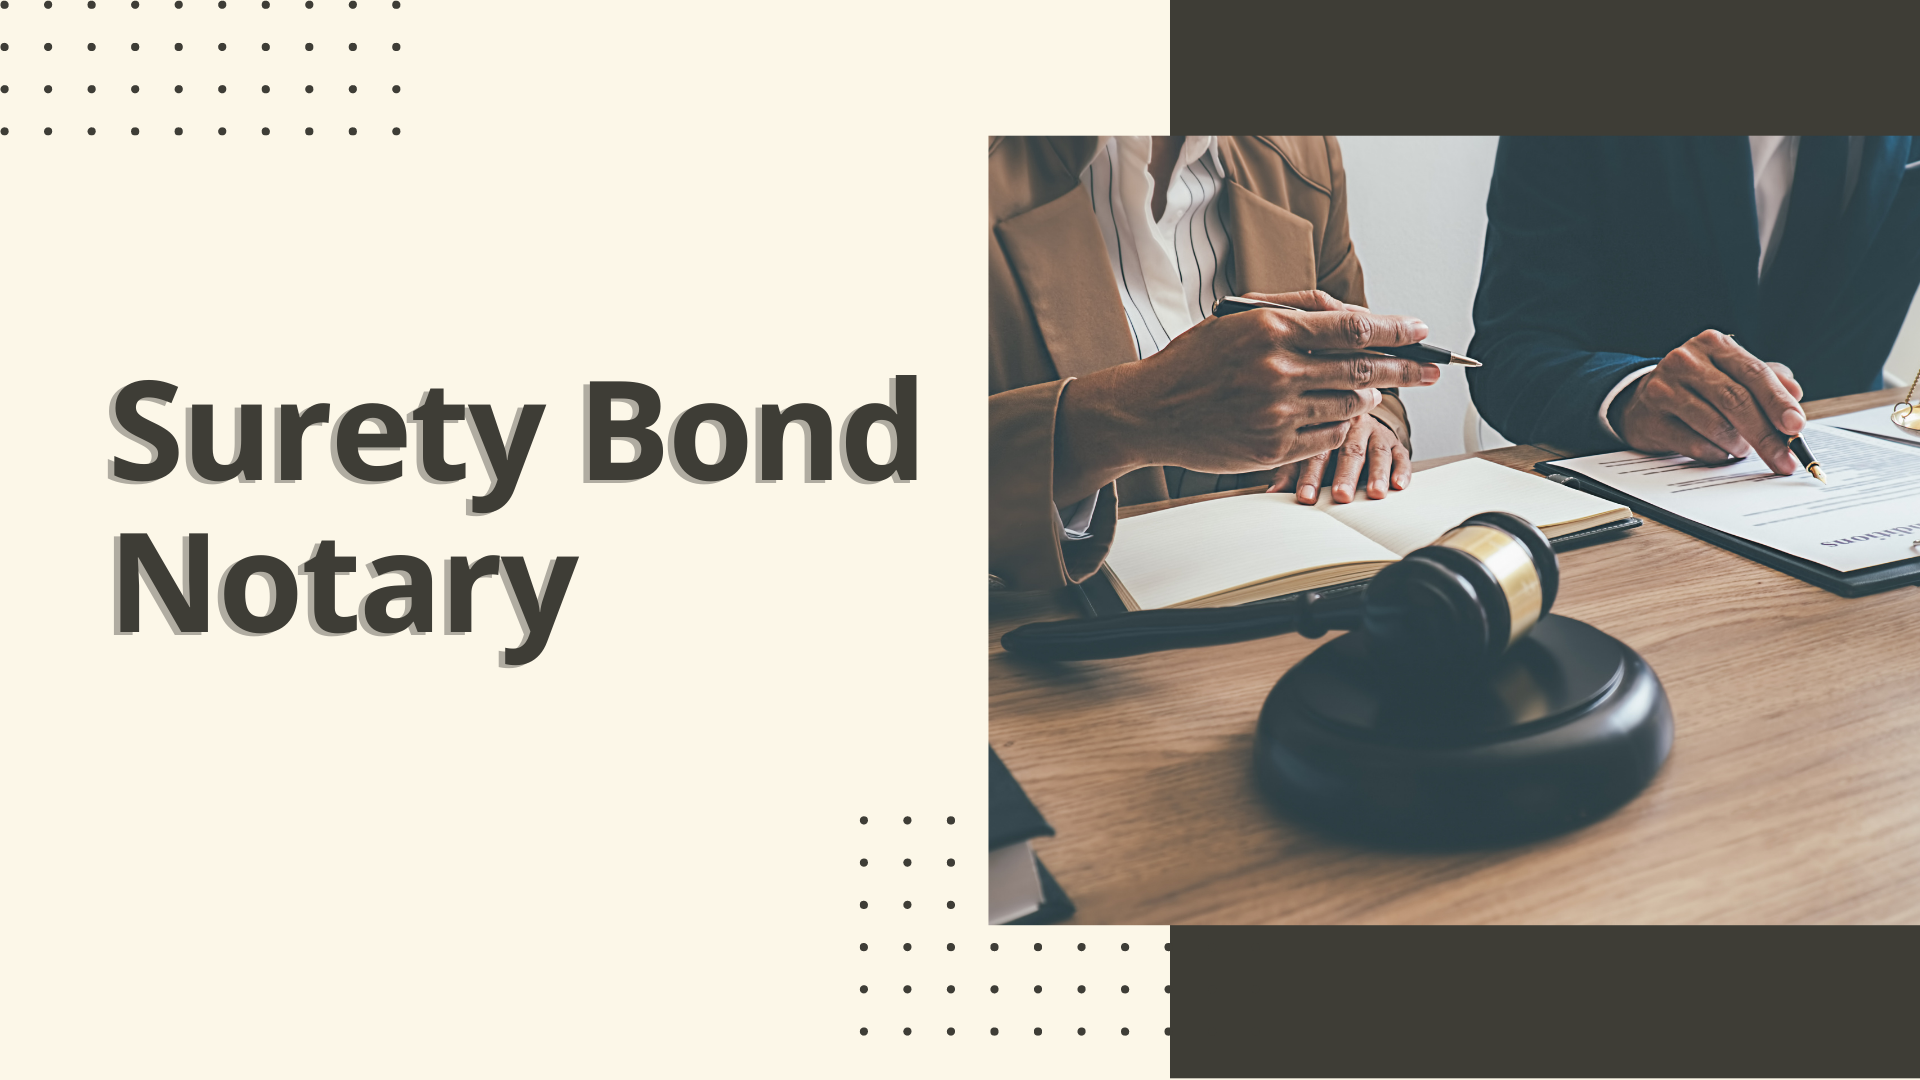 Surety Bond-Surety Bond Notary